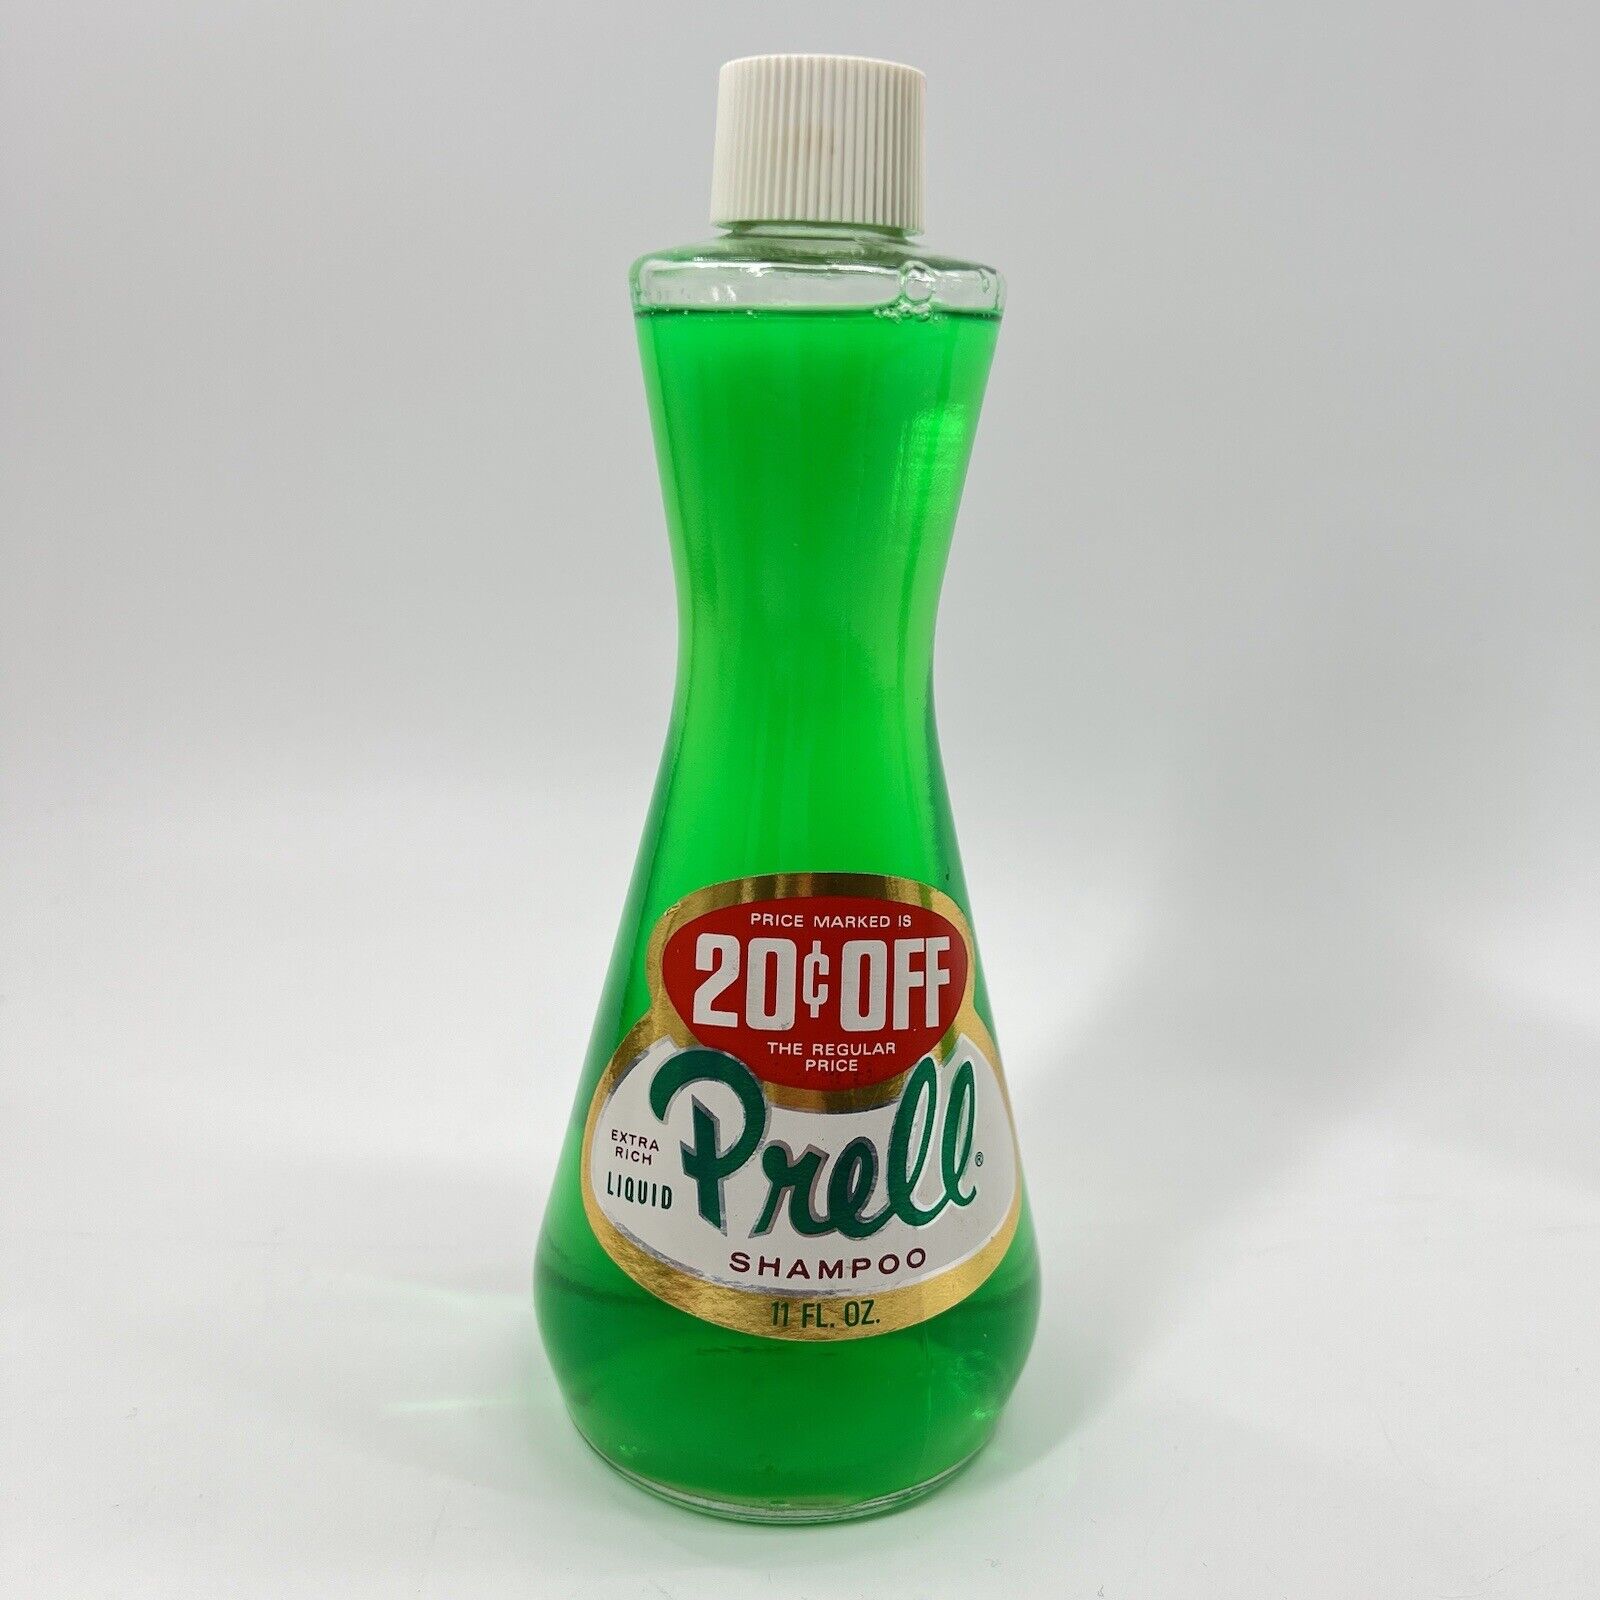 VTG PRELL Shampoo 11 Oz Shatterproof 1970s Proctor & Gamble FULL MINT